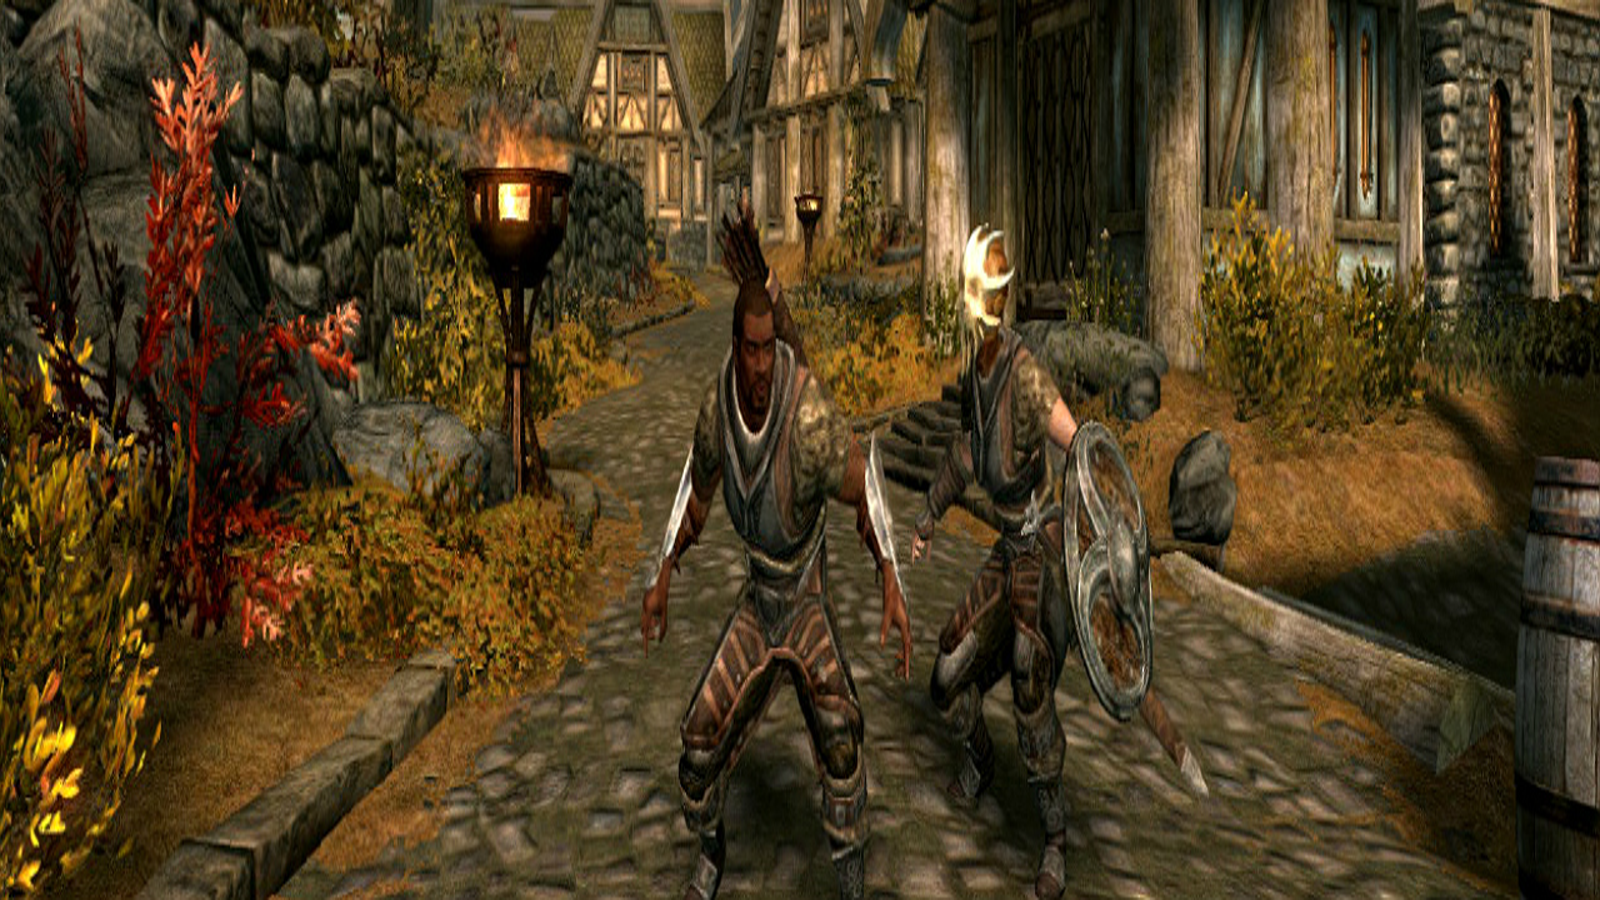 The Elder Scrolls V: Skyrim for Switch Review